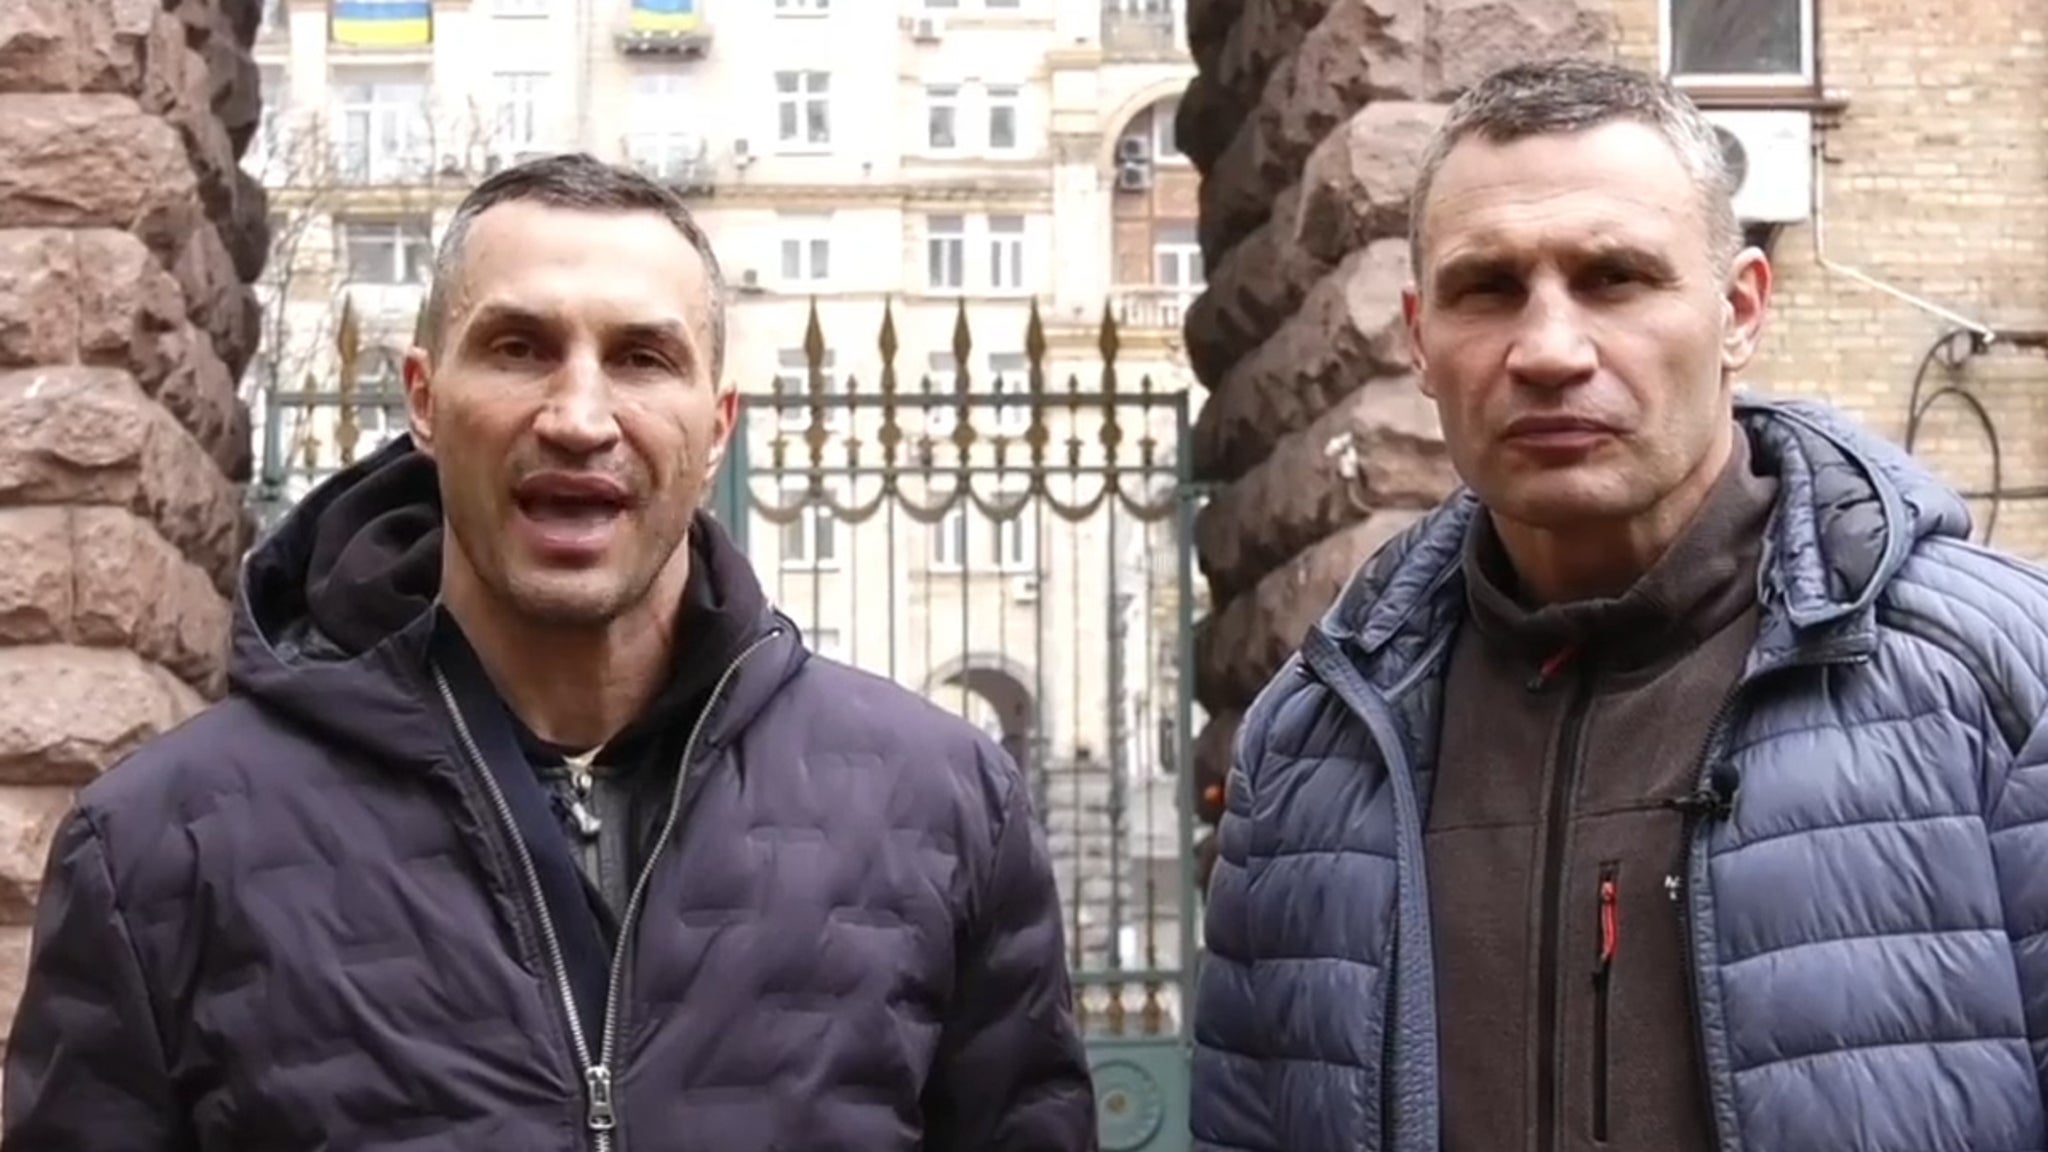 Wladimir and Vitali Klitschko Vow To Protect Ukraine From Vladimir Putin